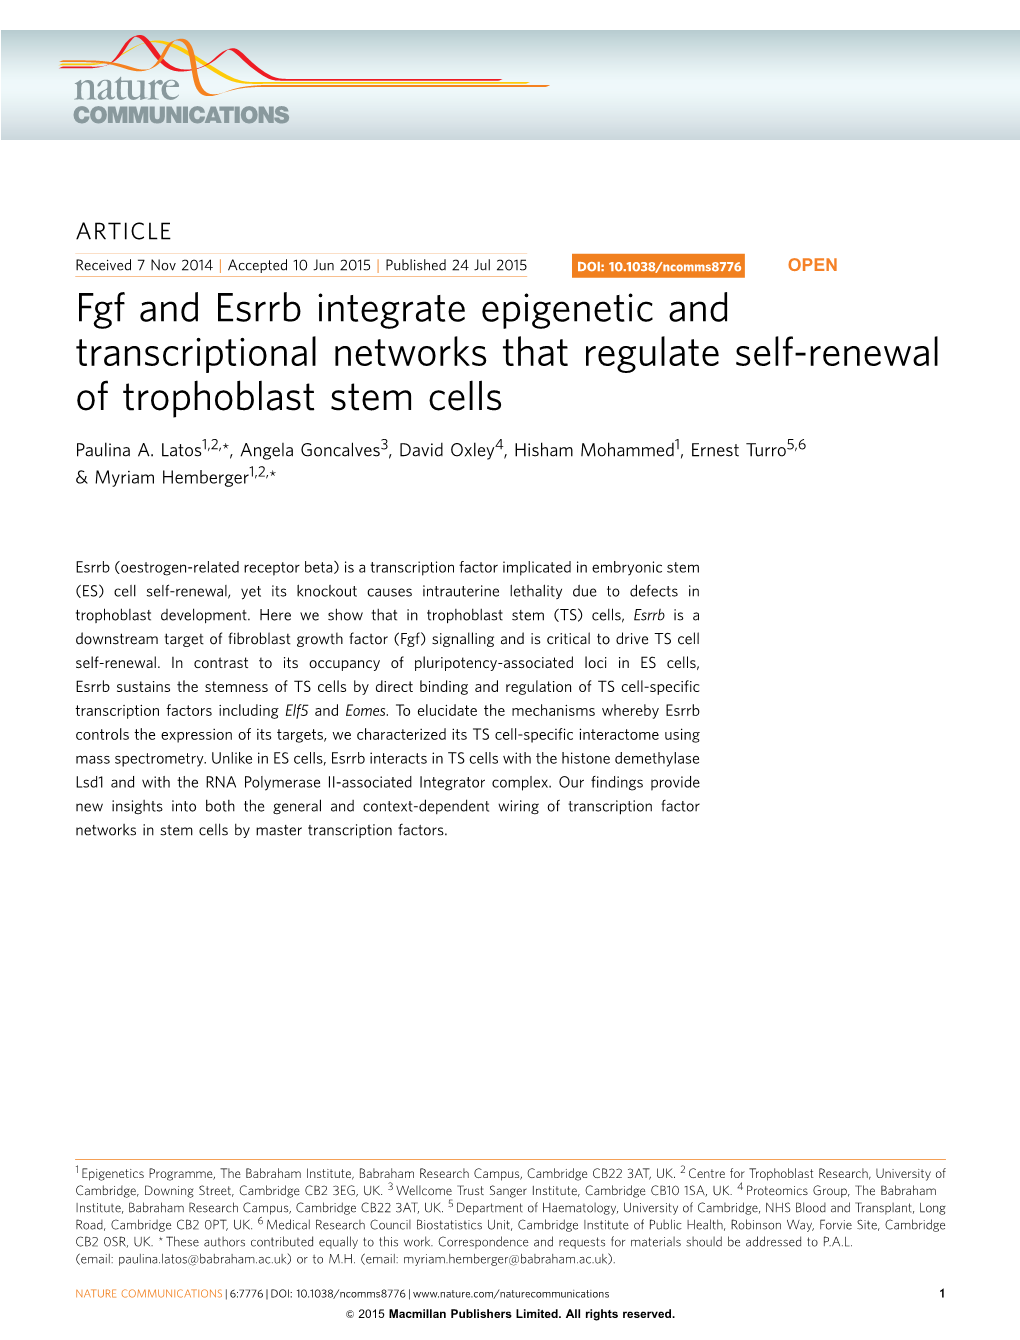 Fgf and Esrrb Integrate Epigenetic and Transcriptional Networks That Regulate Self-Renewal of Trophoblast Stem Cells